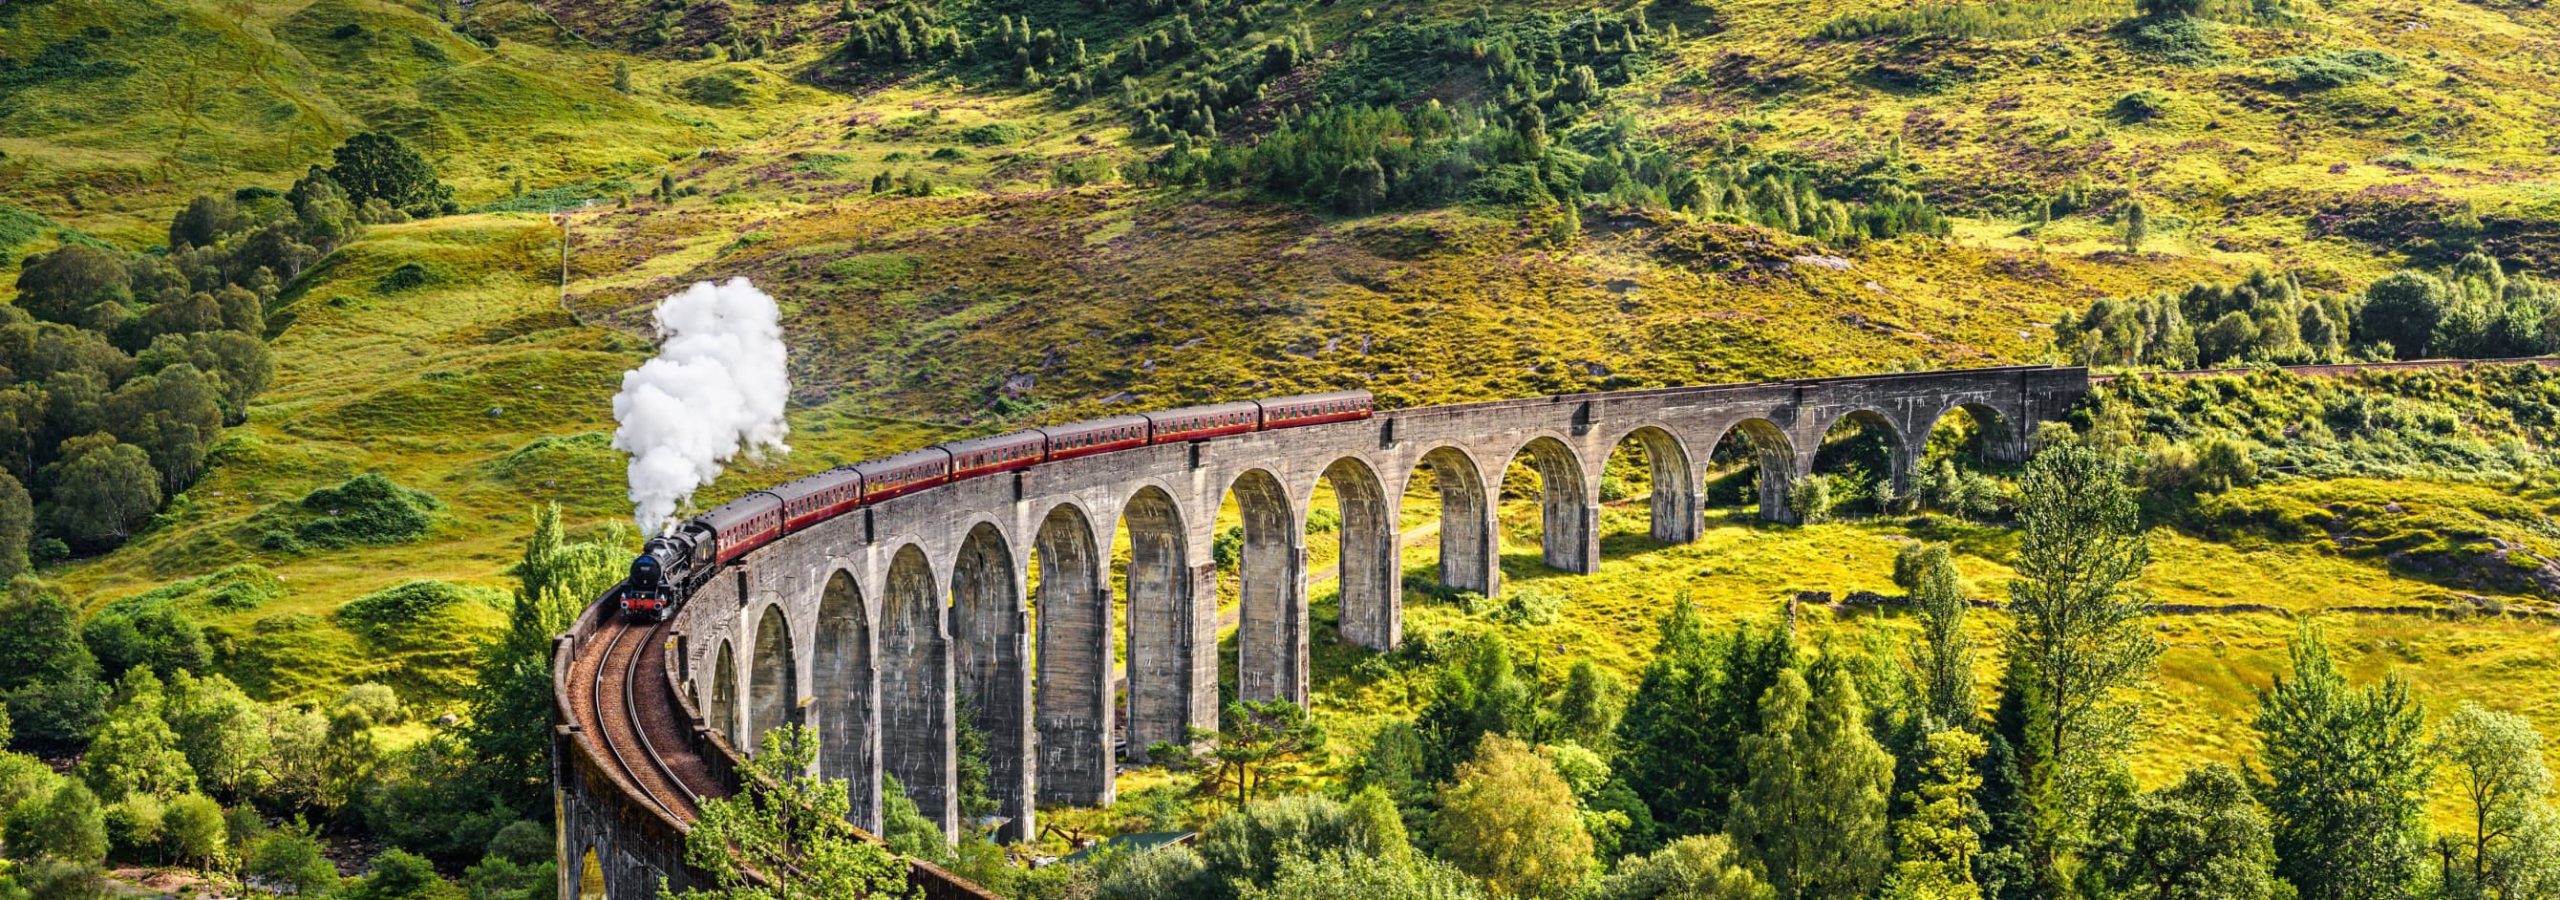 The Glenfinnan Viaduct, in Scotland.